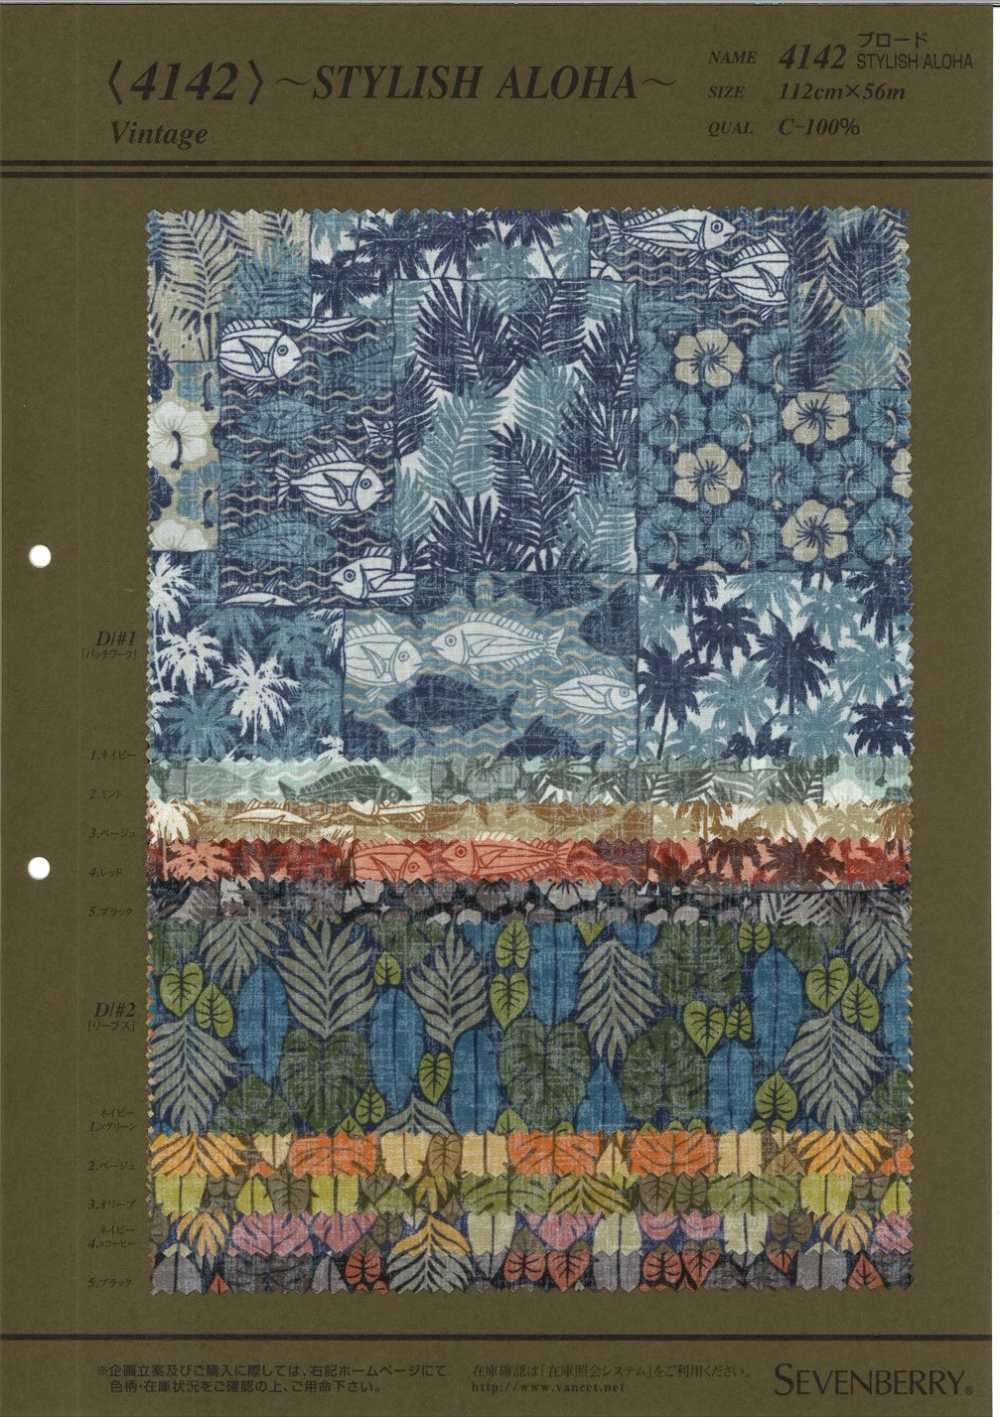 4142 40 Faden Wollstoff STYLISH ALOHA (Vintage)[Textilgewebe] VANCET